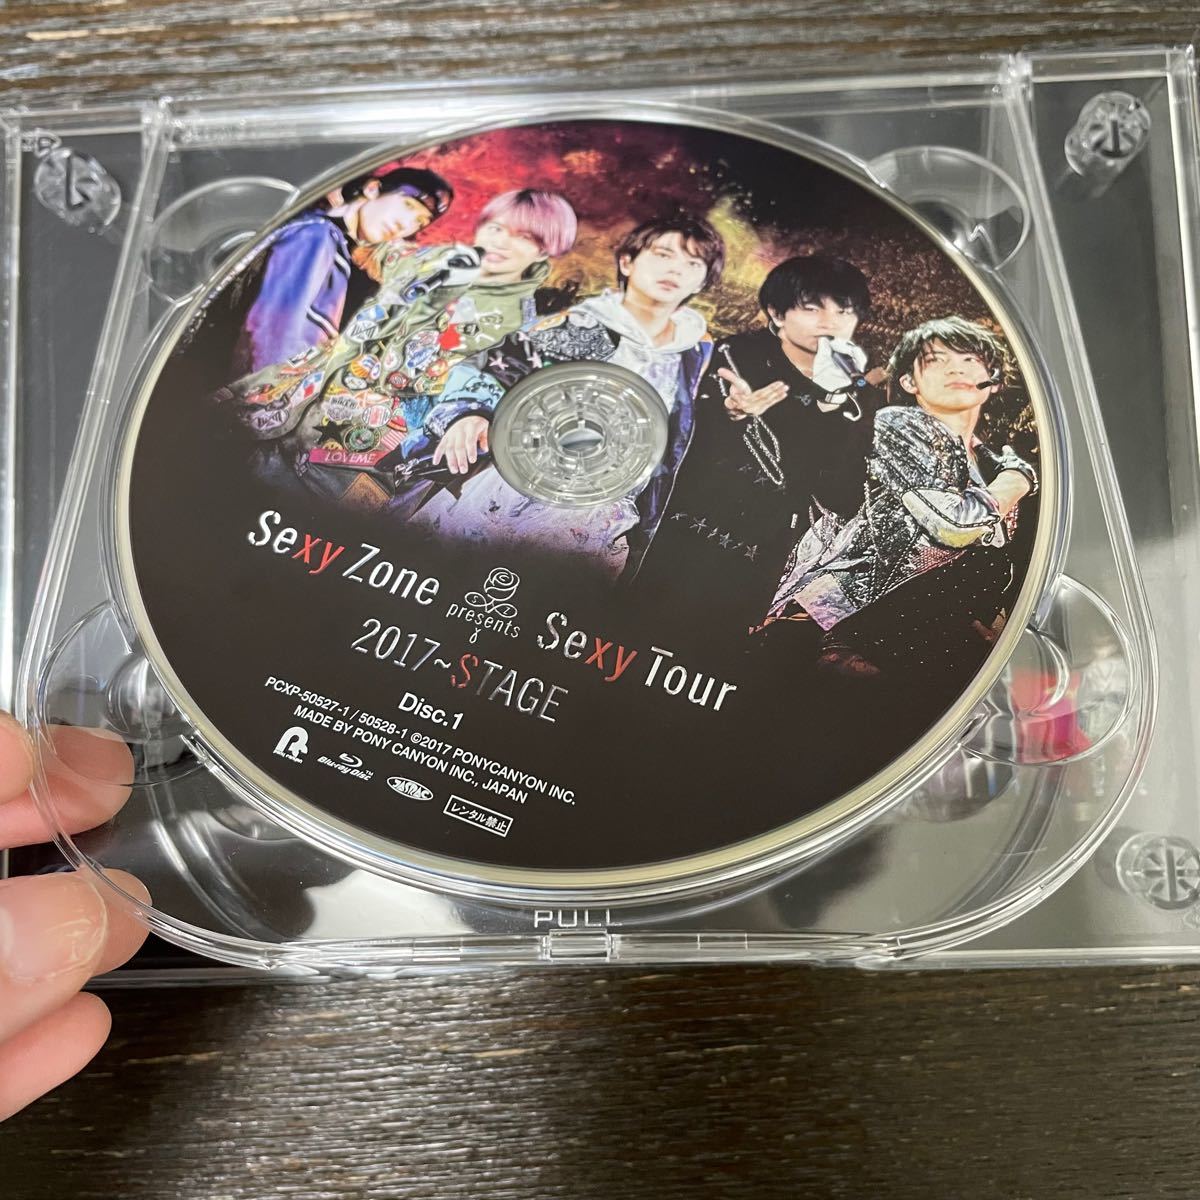 Sexy Zone Presents Sexy Tour ~ STAGE (Blu-ray初回限定盤)